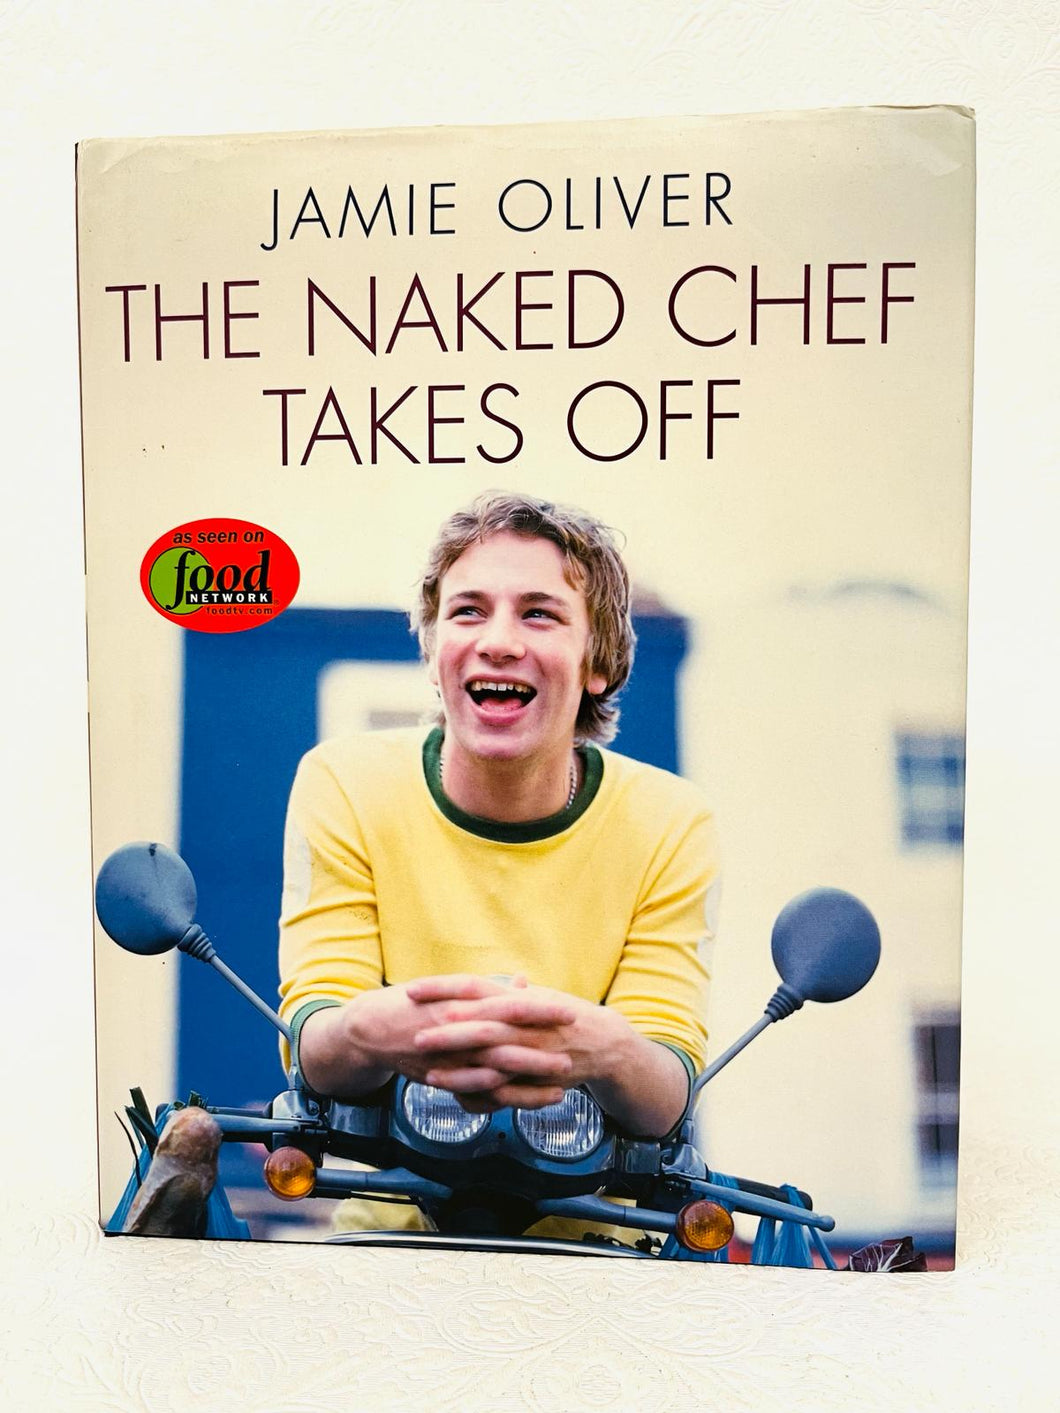 JAMIE OLIVER'S 